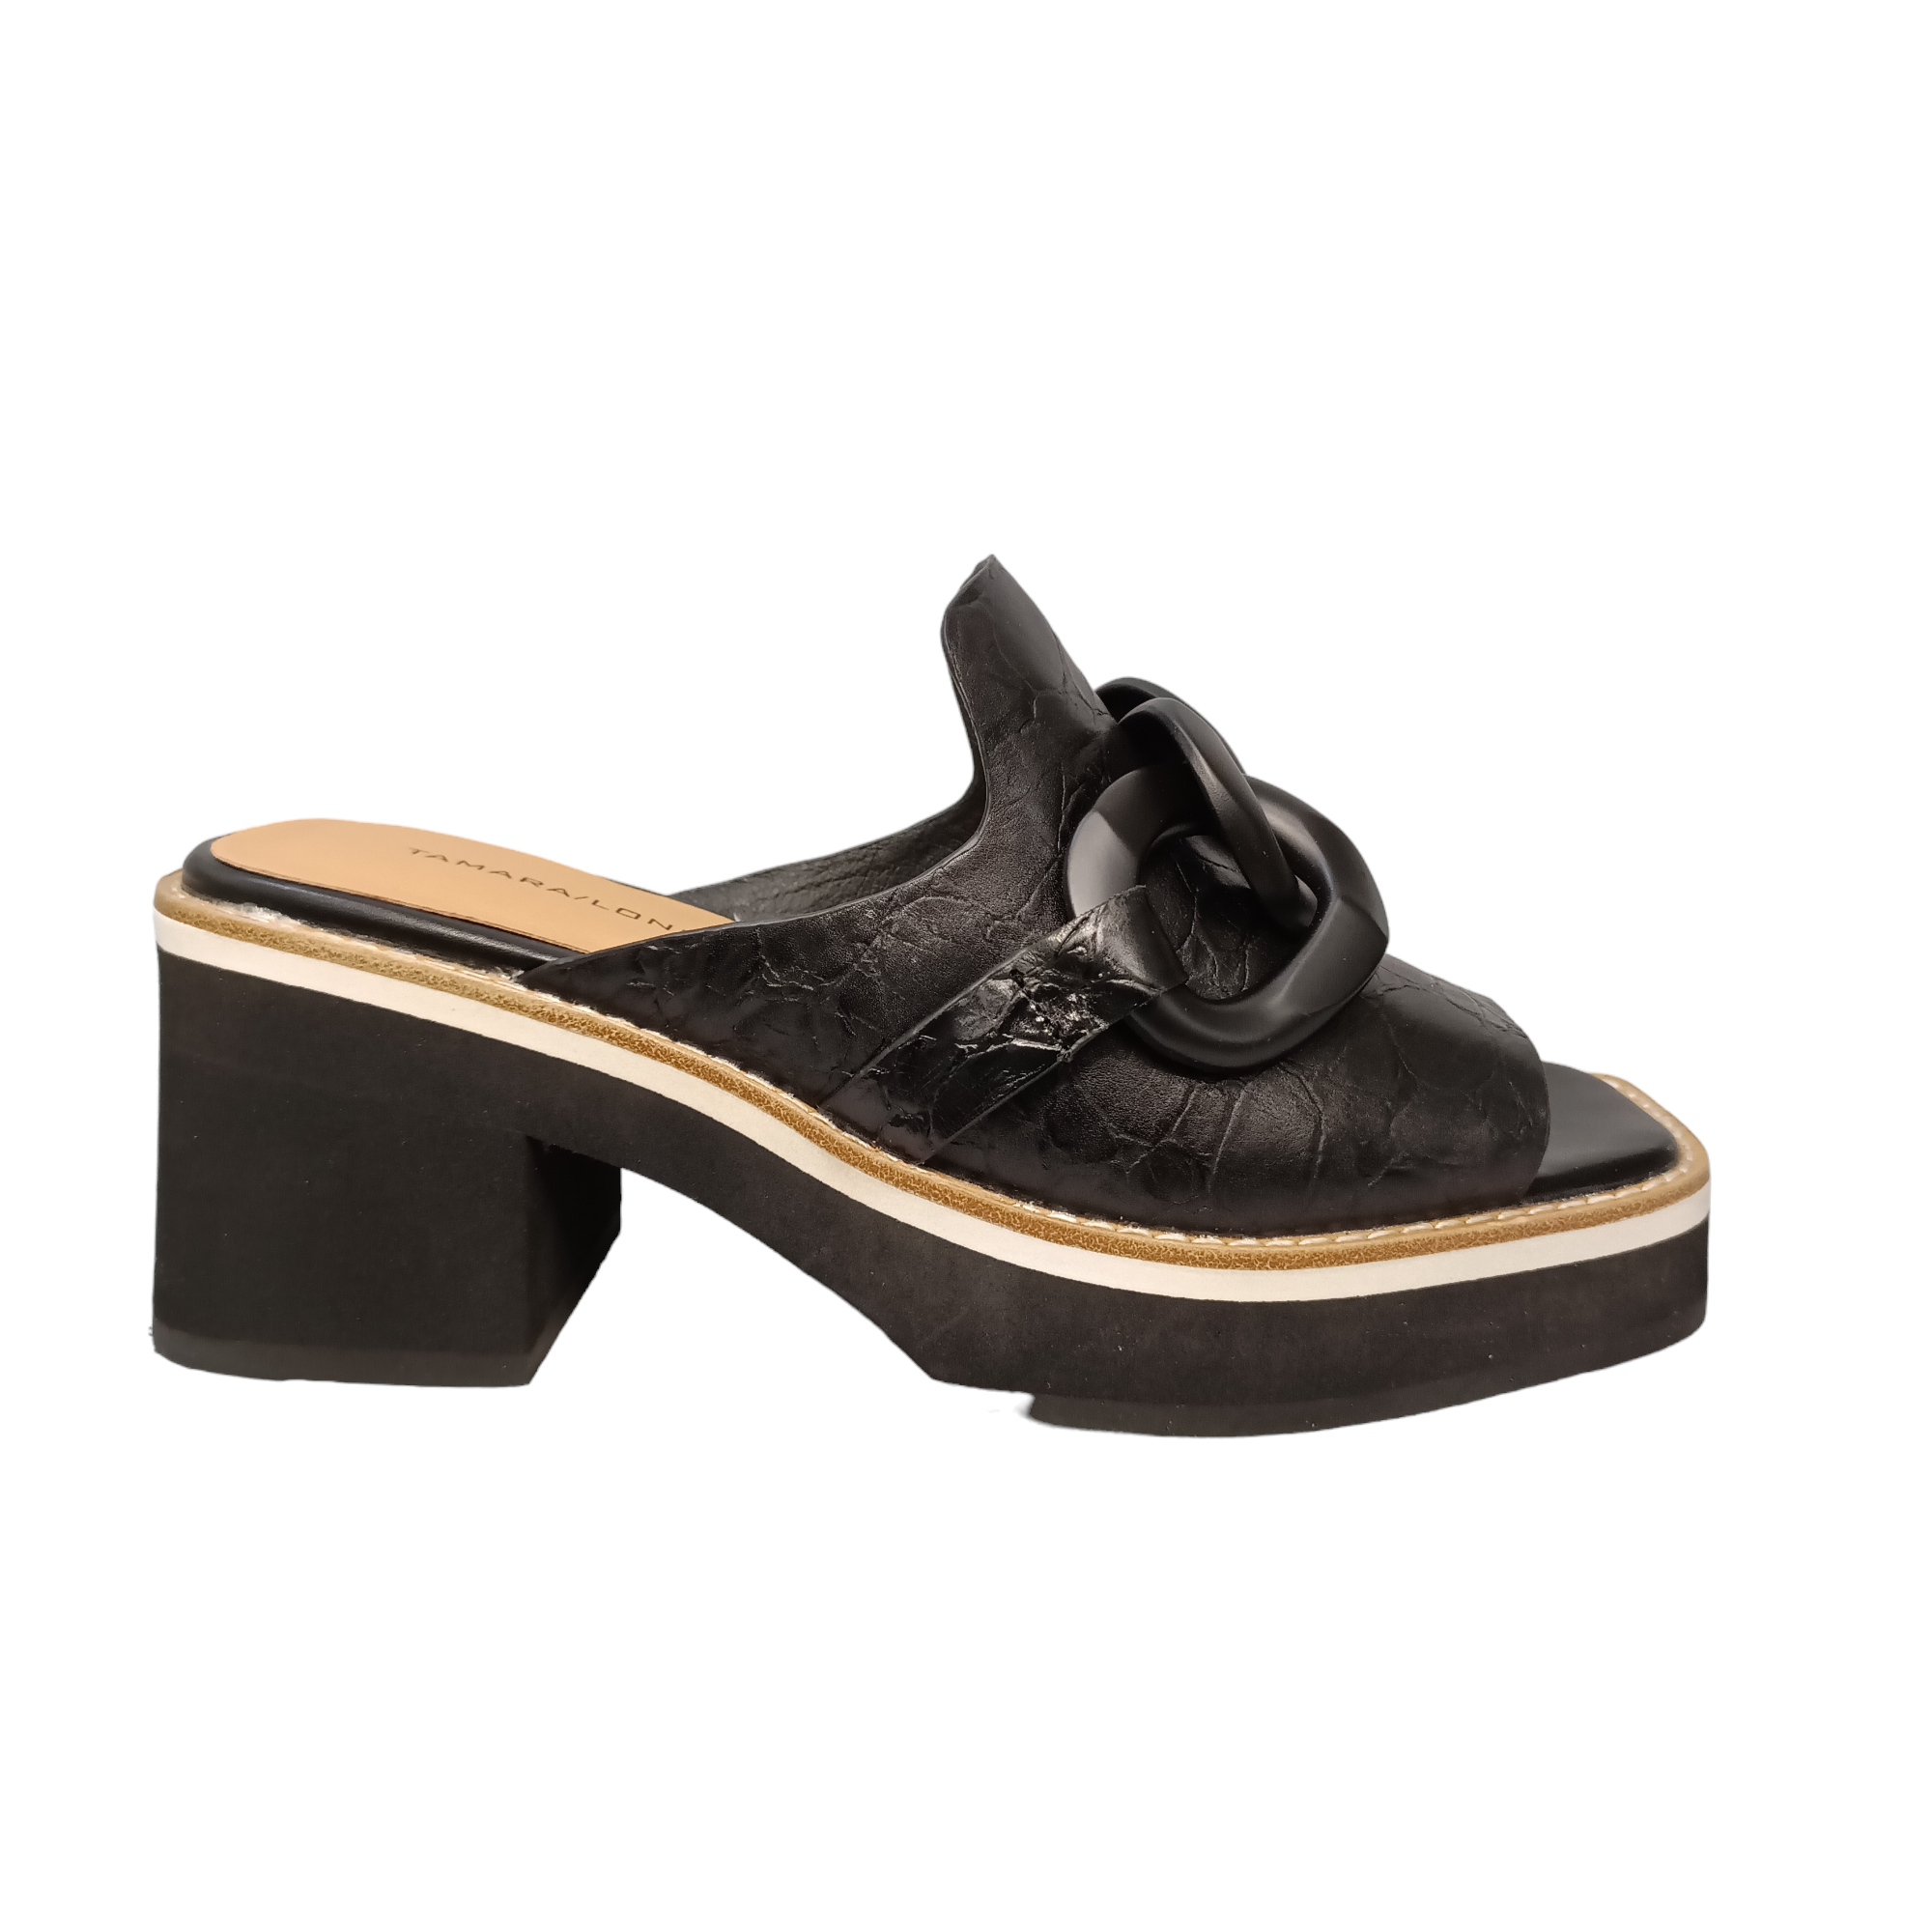 Balmy - shoe&amp;me - Tamara - Slide - Heels, Slides/Scuffs, Summer, Womens